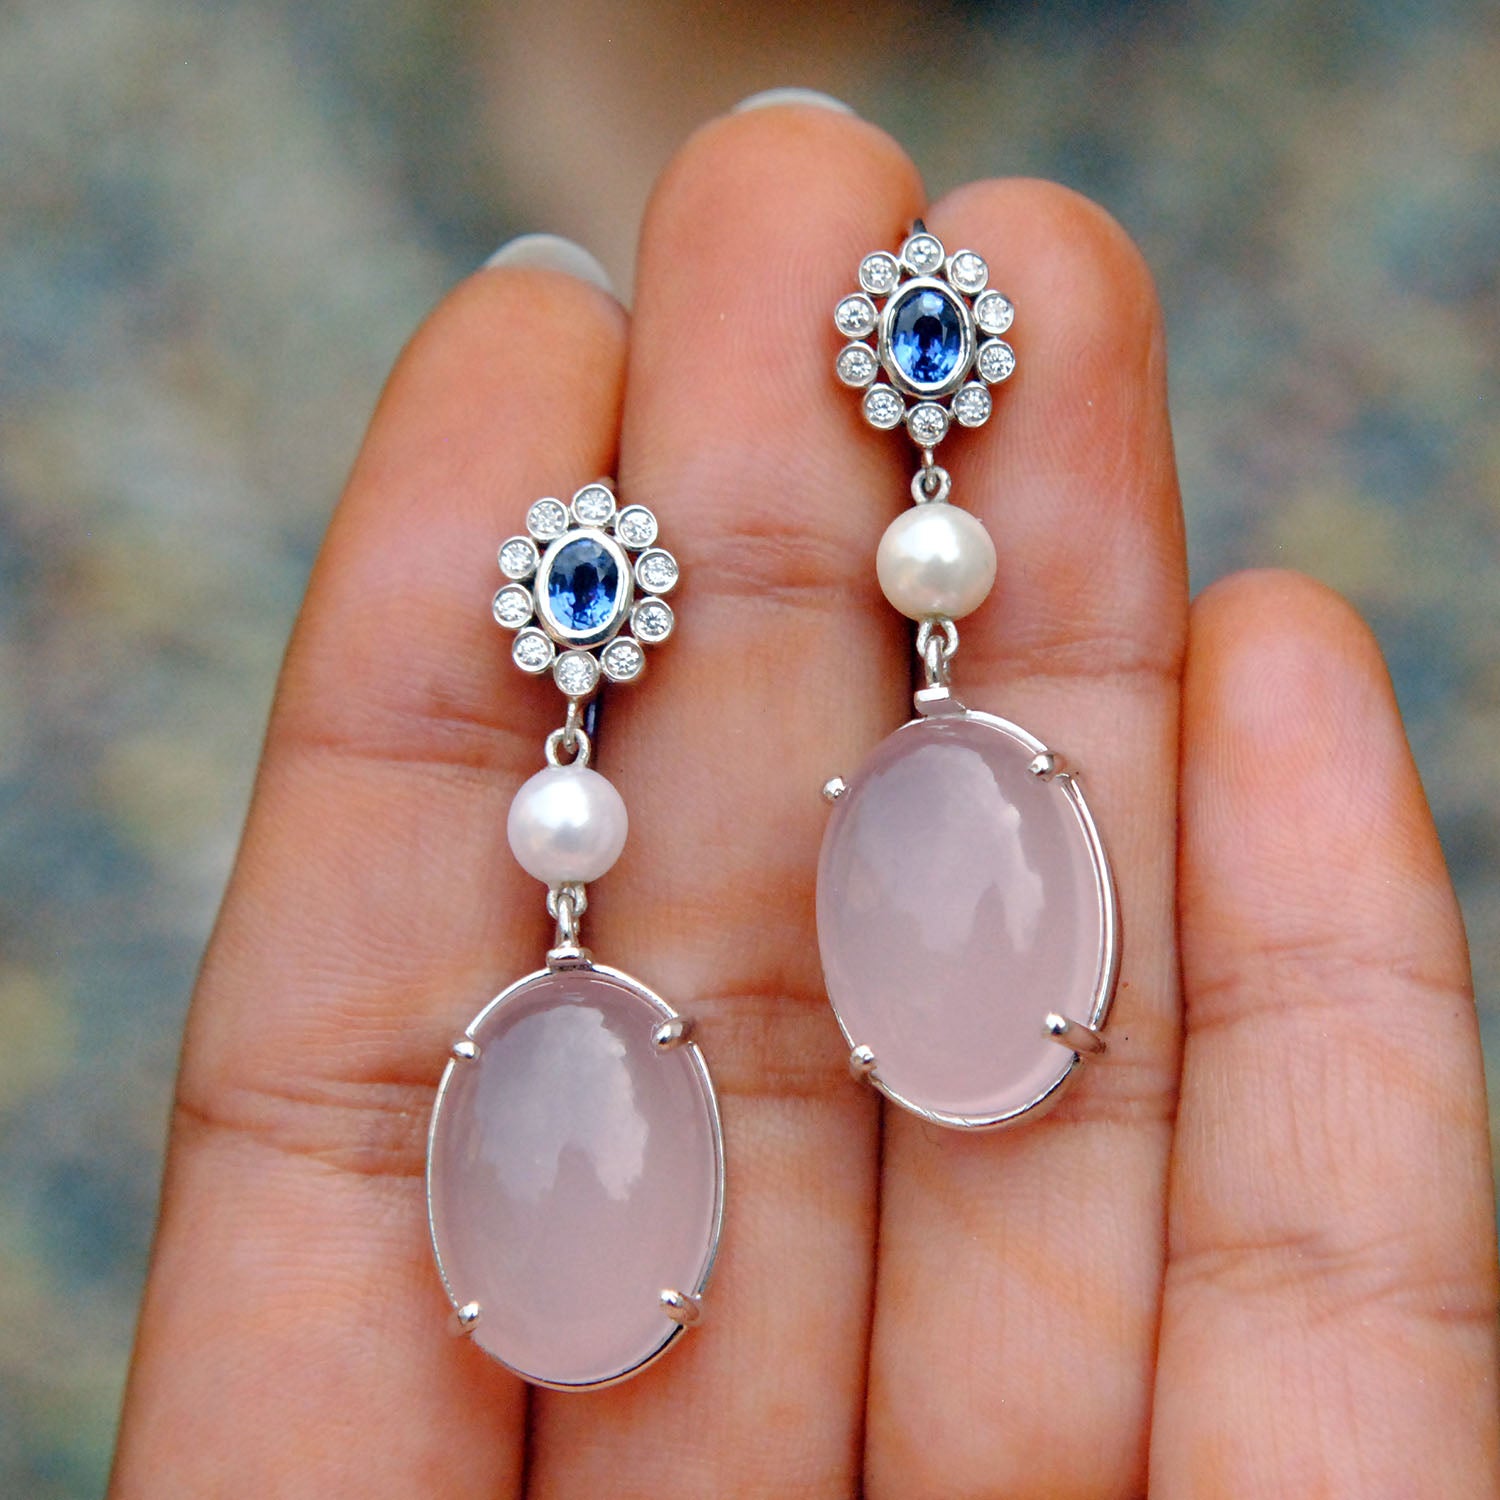 Details more than 236 rose quartz dangle earrings